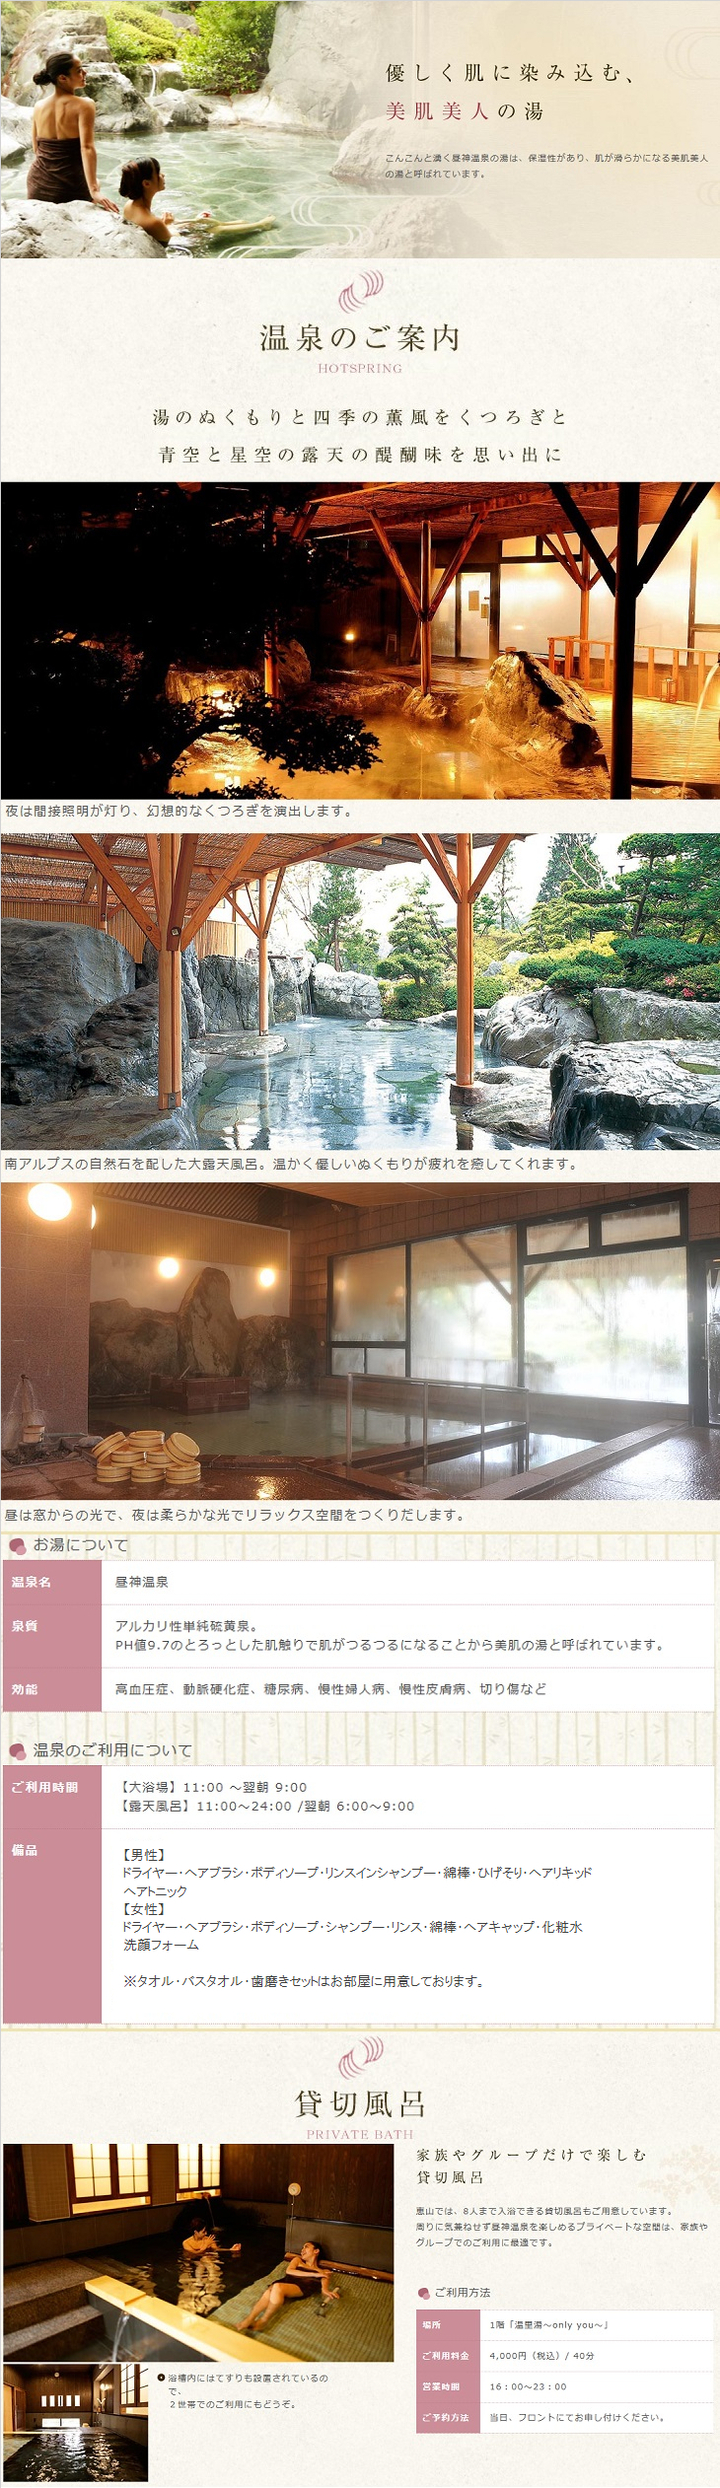 ■日本庭園露天風呂で名湯「昼神温泉」を満喫